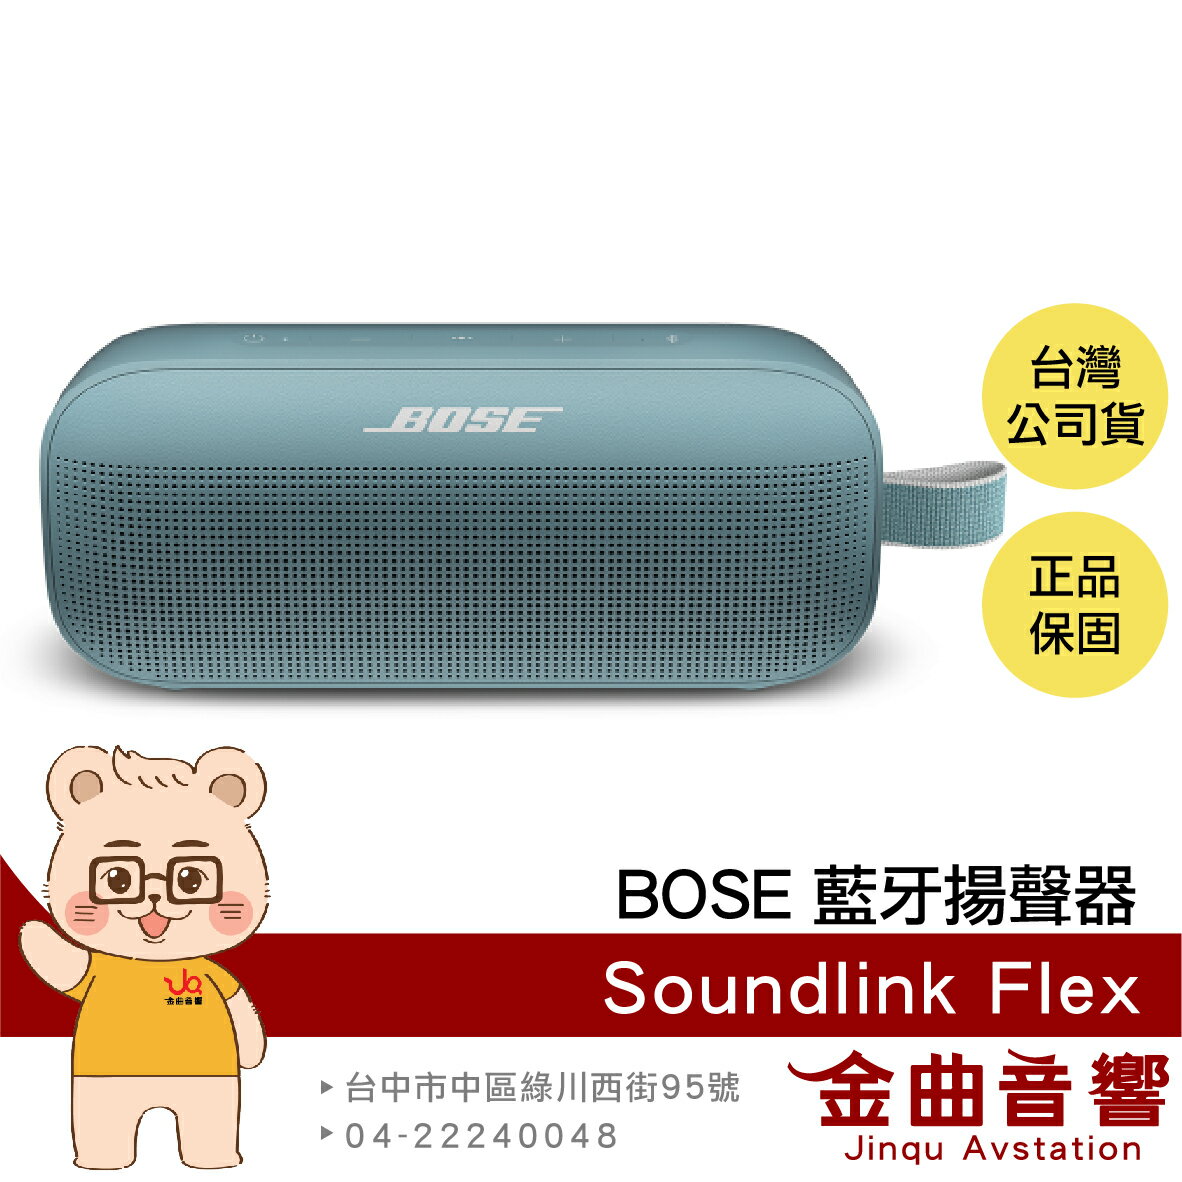 Bose SoundLink Flex 石墨藍IP67 防水防塵可攜式藍牙揚聲器| 金曲音響 